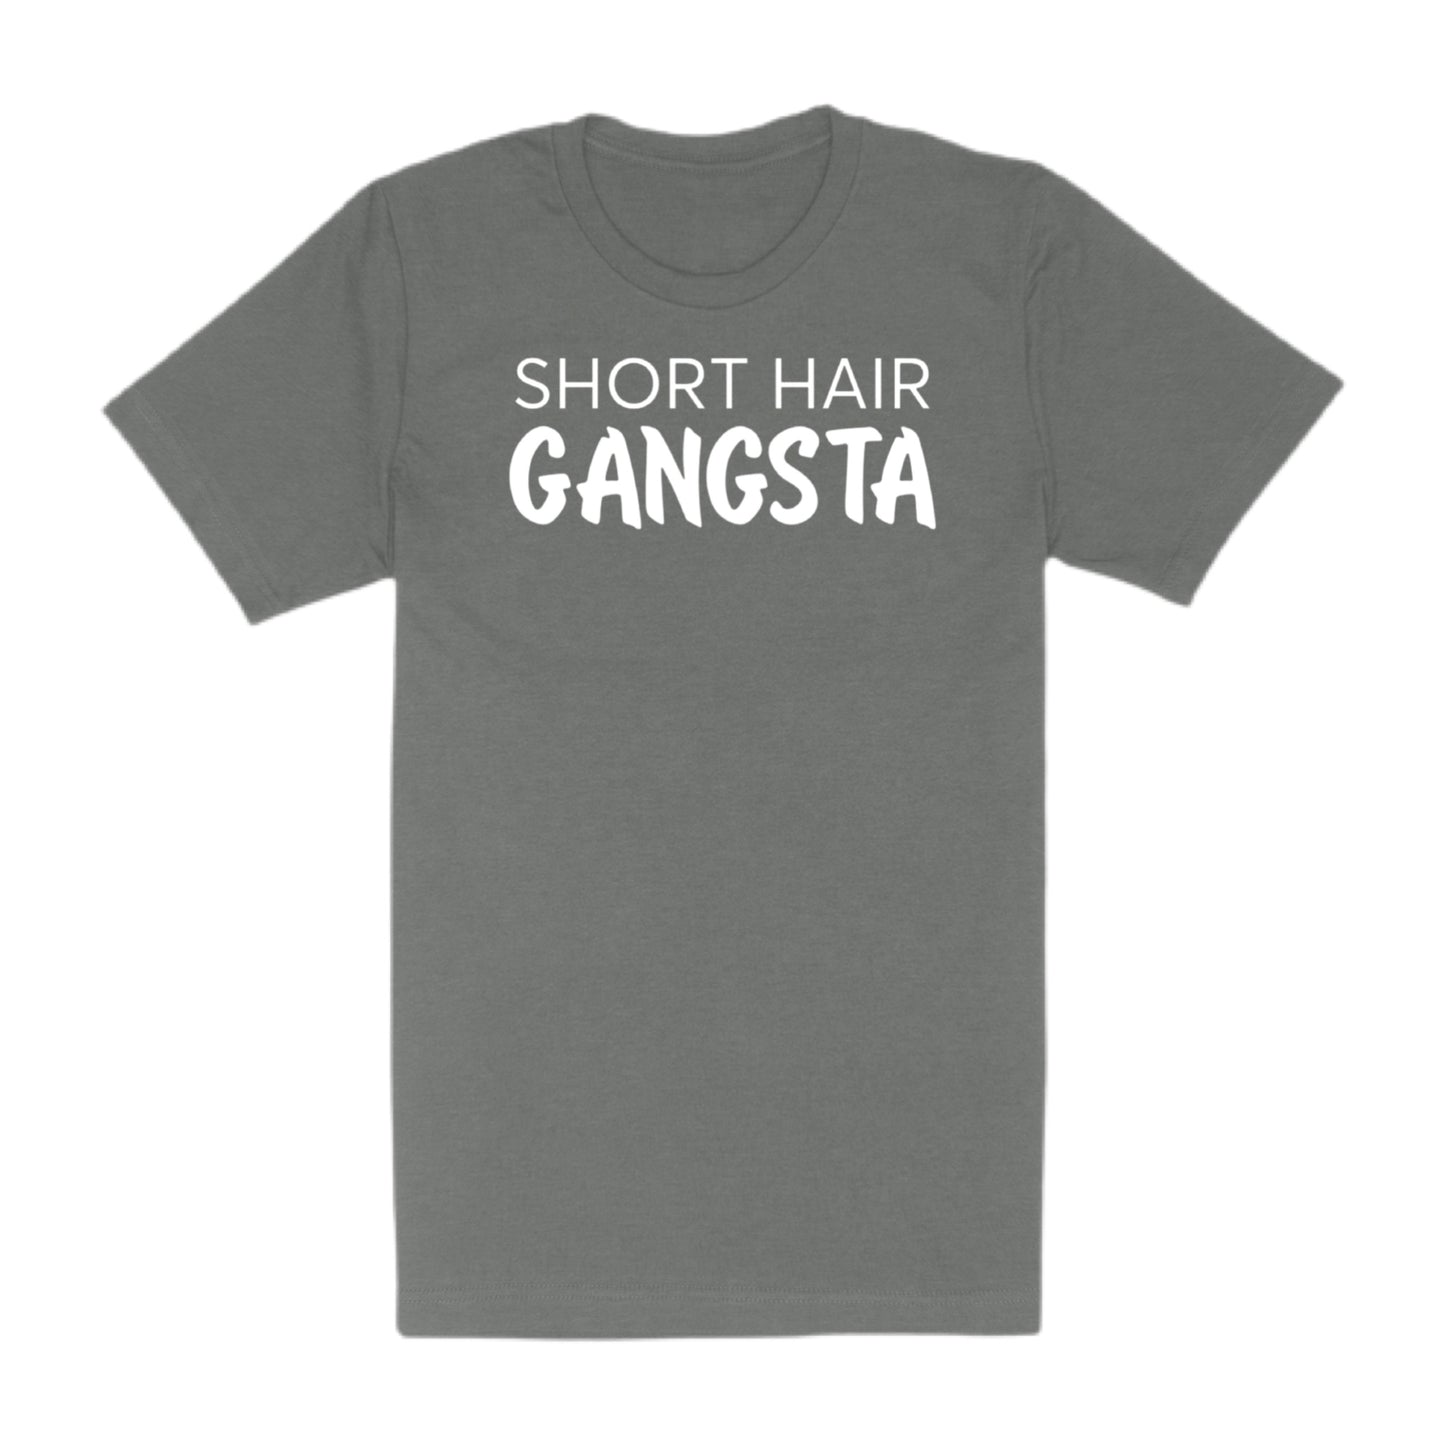 Short Hair Gangsta Tee